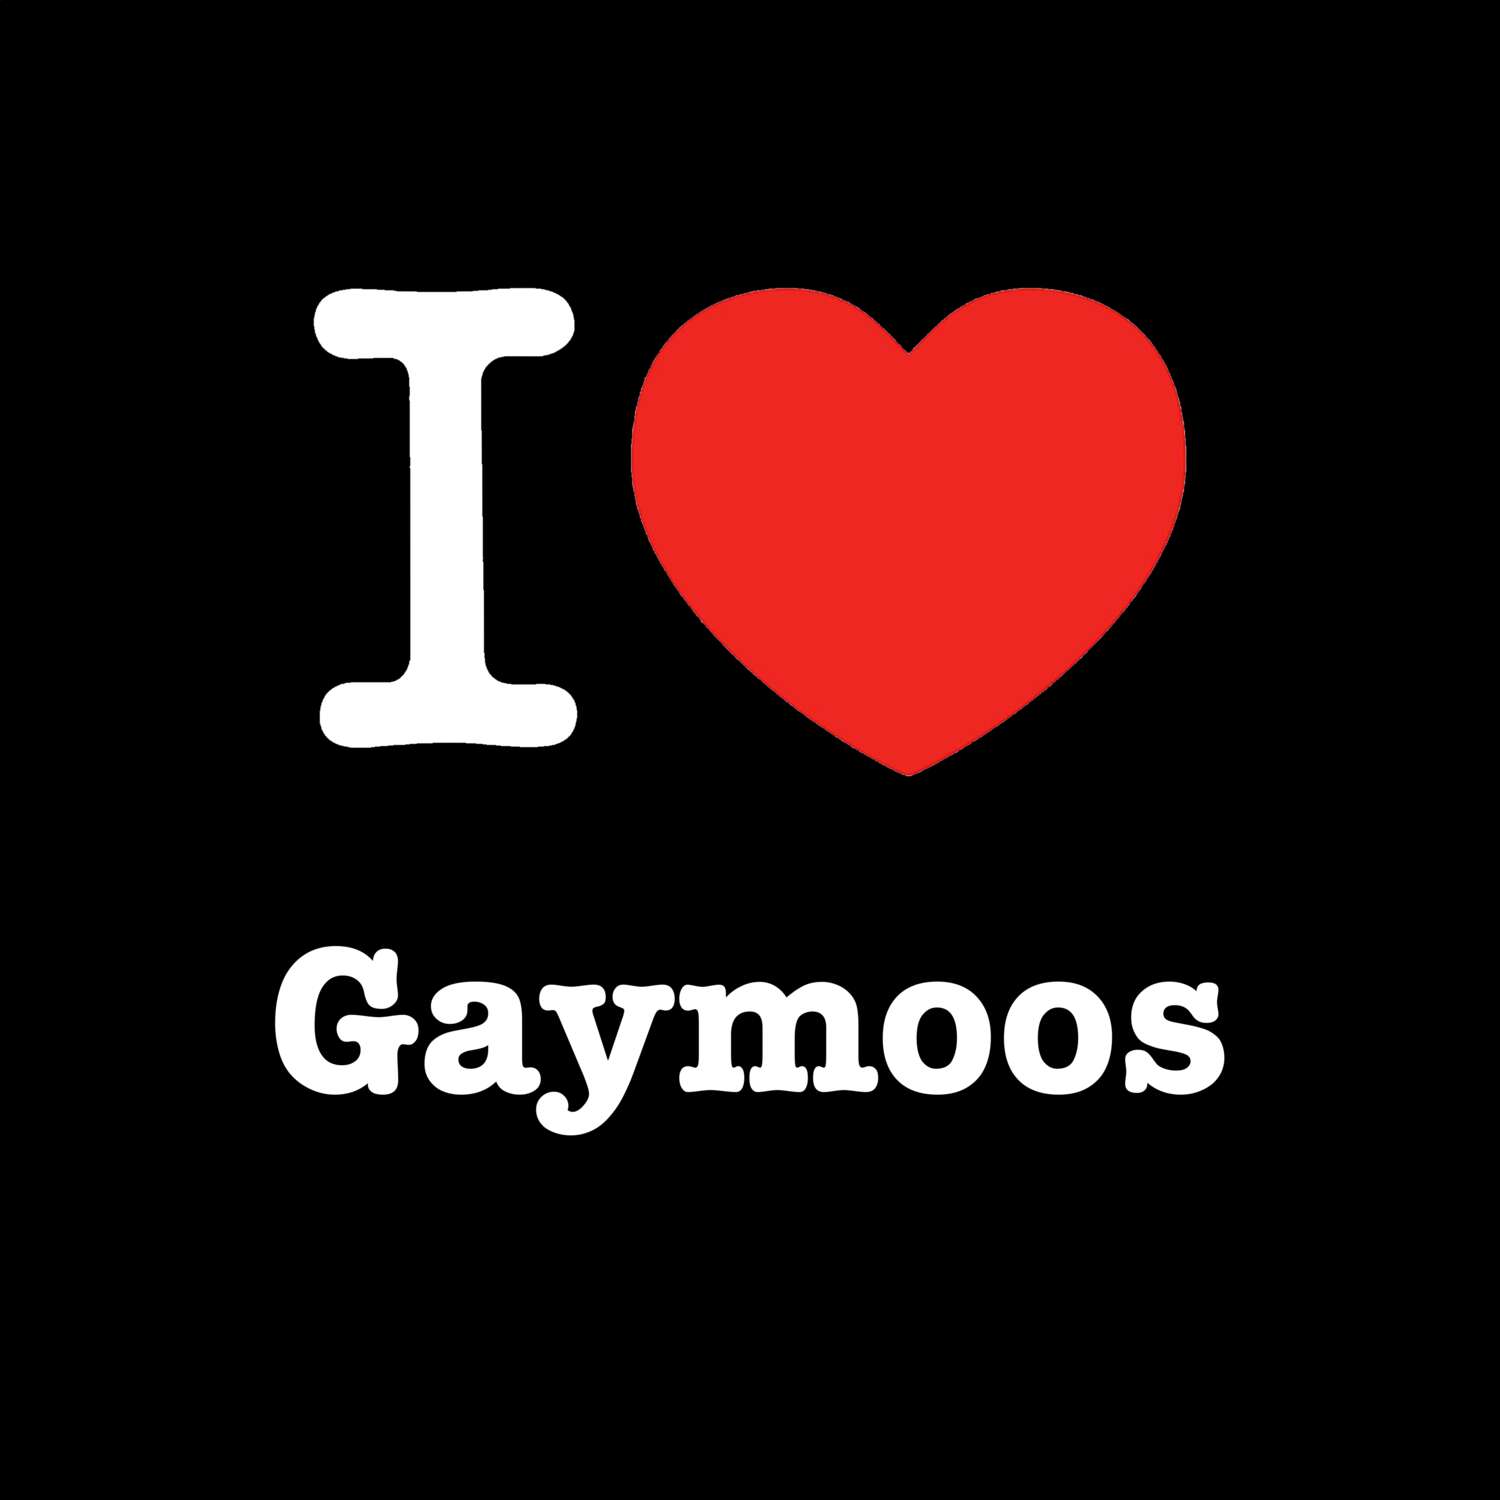 Gaymoos T-Shirt »I love«